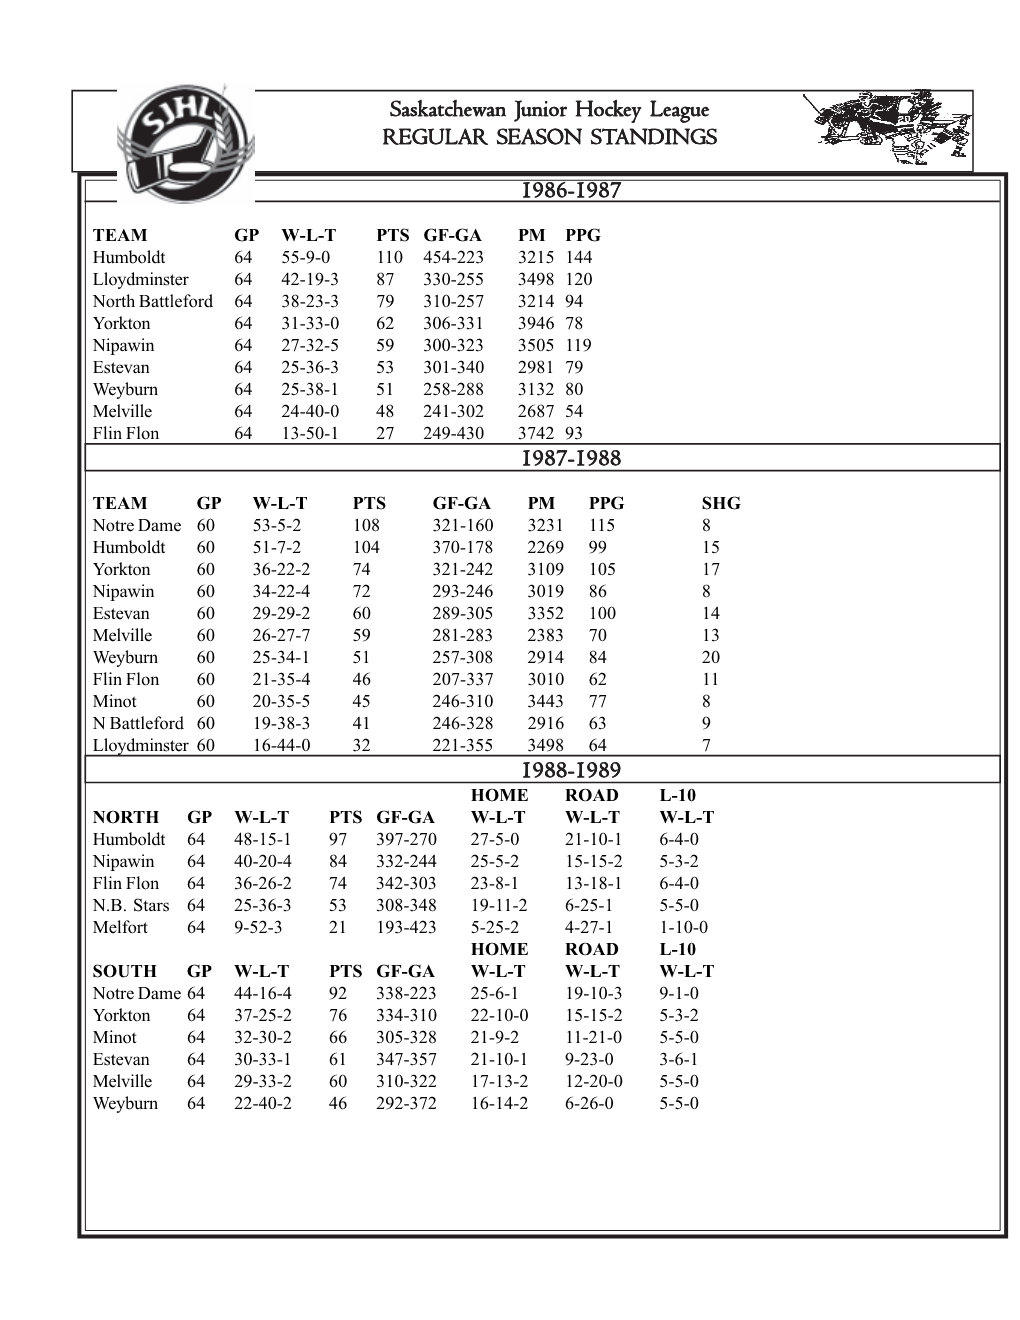 Saskatchewan Junior Hockey League Standings 2005-06